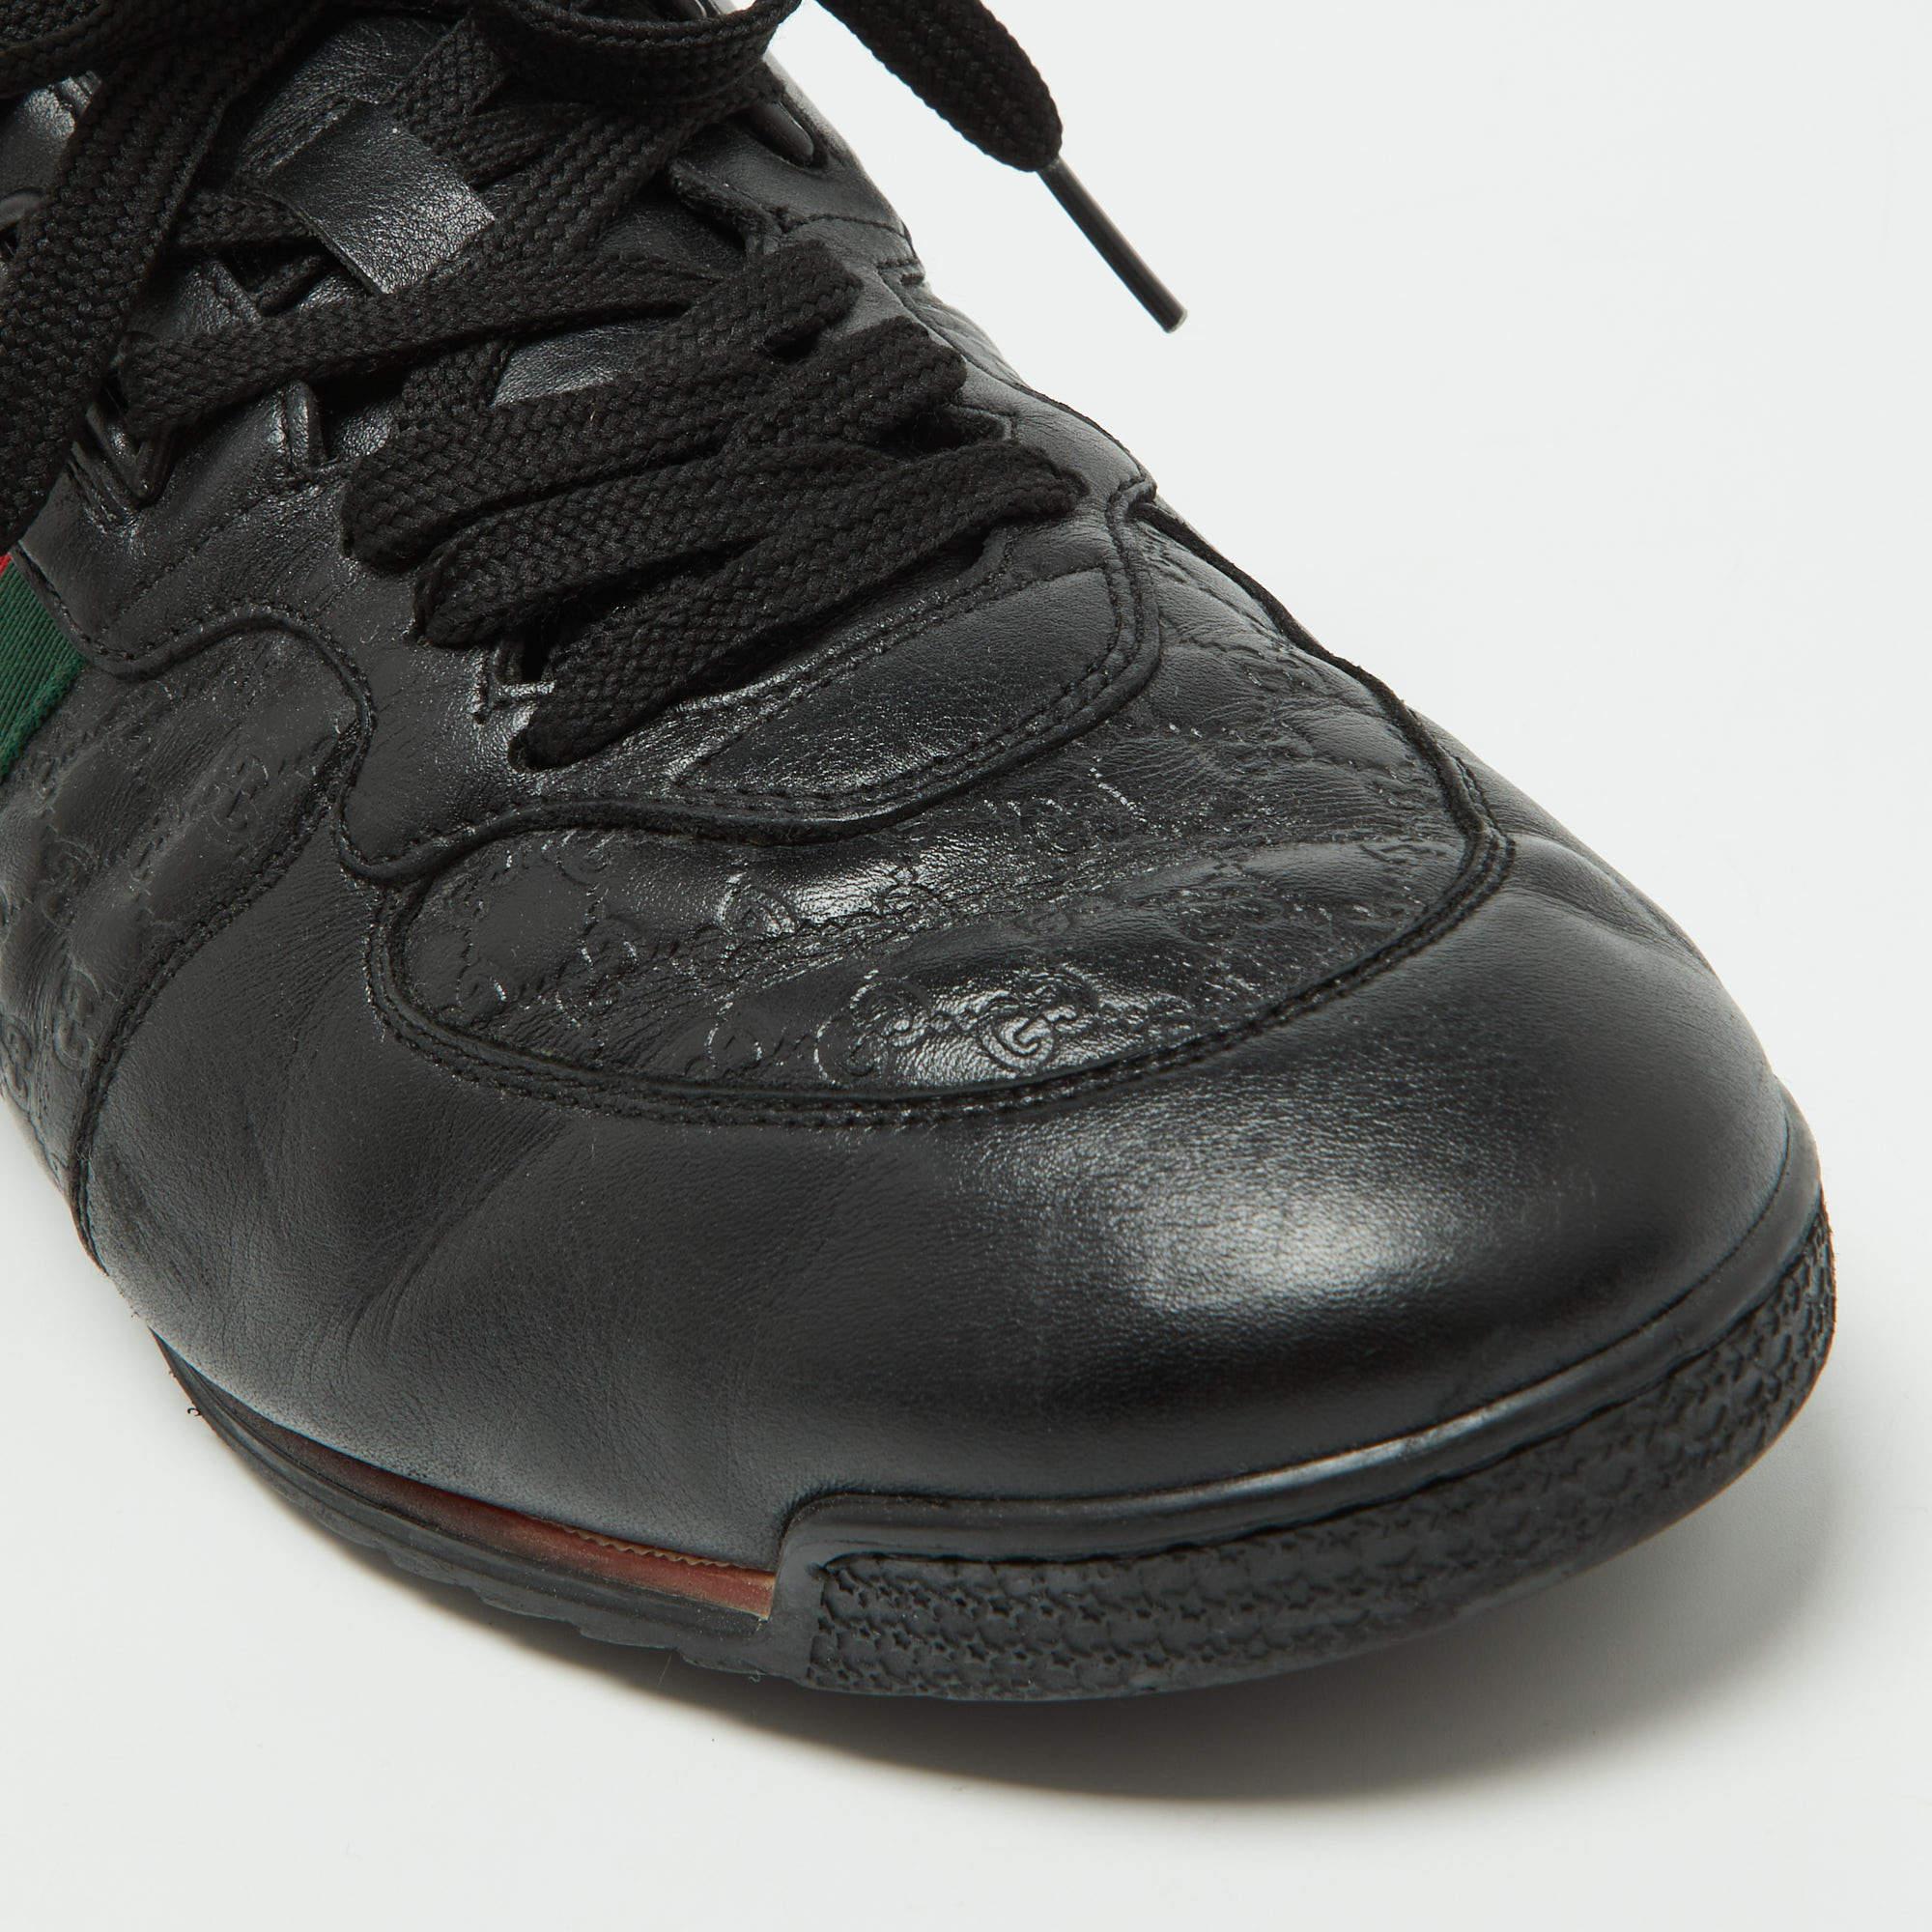 Noir Gucci Black Leather Web Lace Up Sneakers Size 45.5